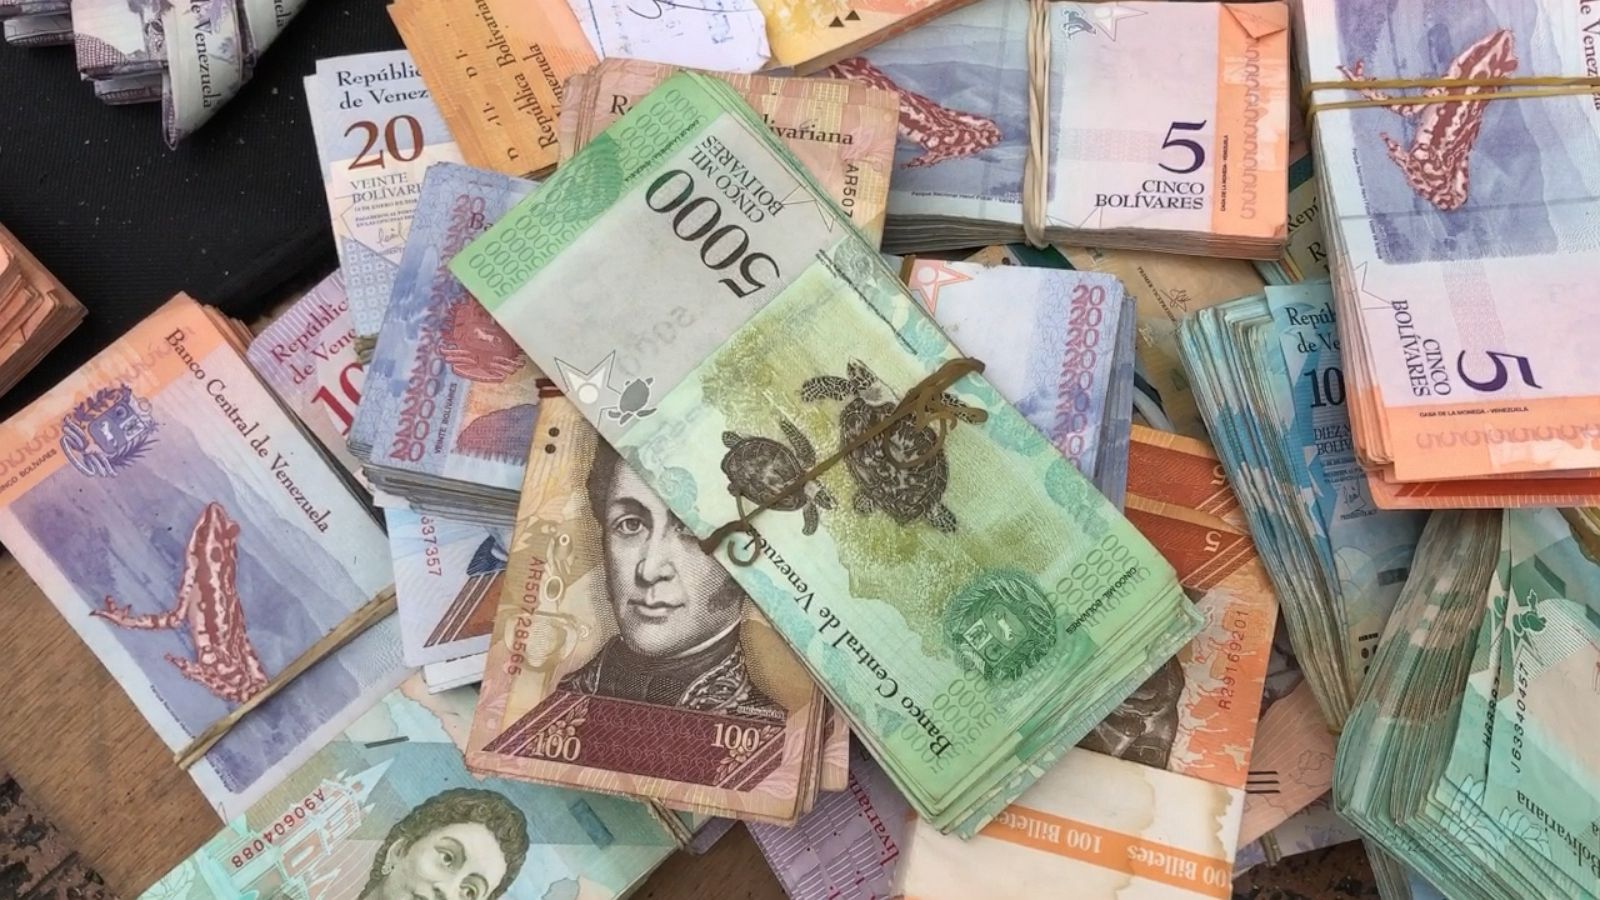 Devalued Venezuelan currency artfully sold on Bogota streets - Good ...